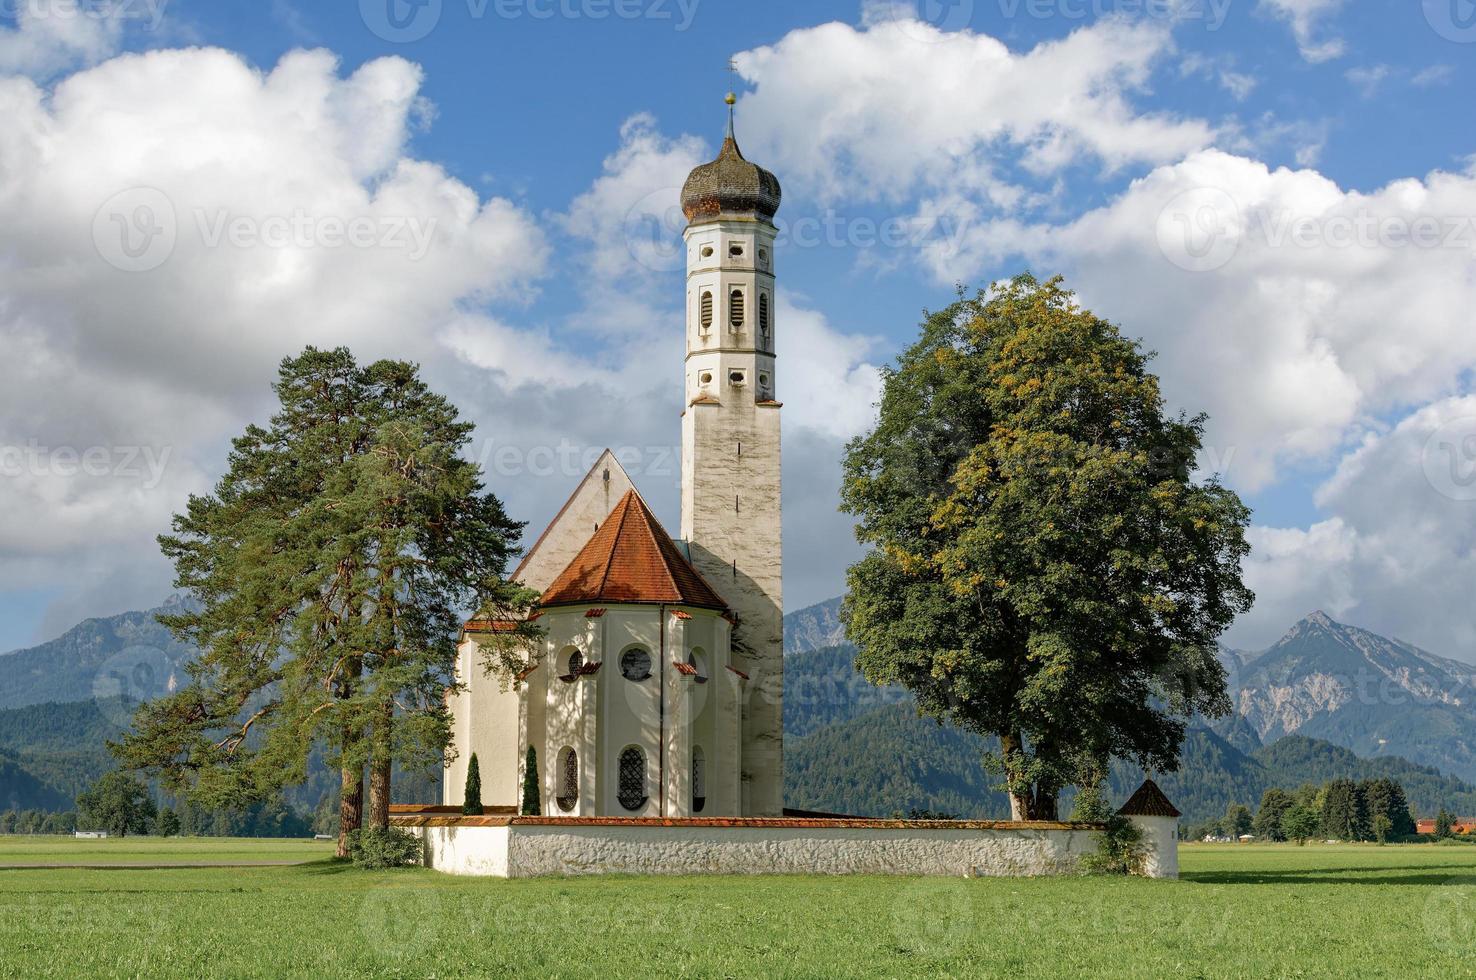 sankt koloman kyrka i schwangau,allgaeu,bayern,tyskland foto